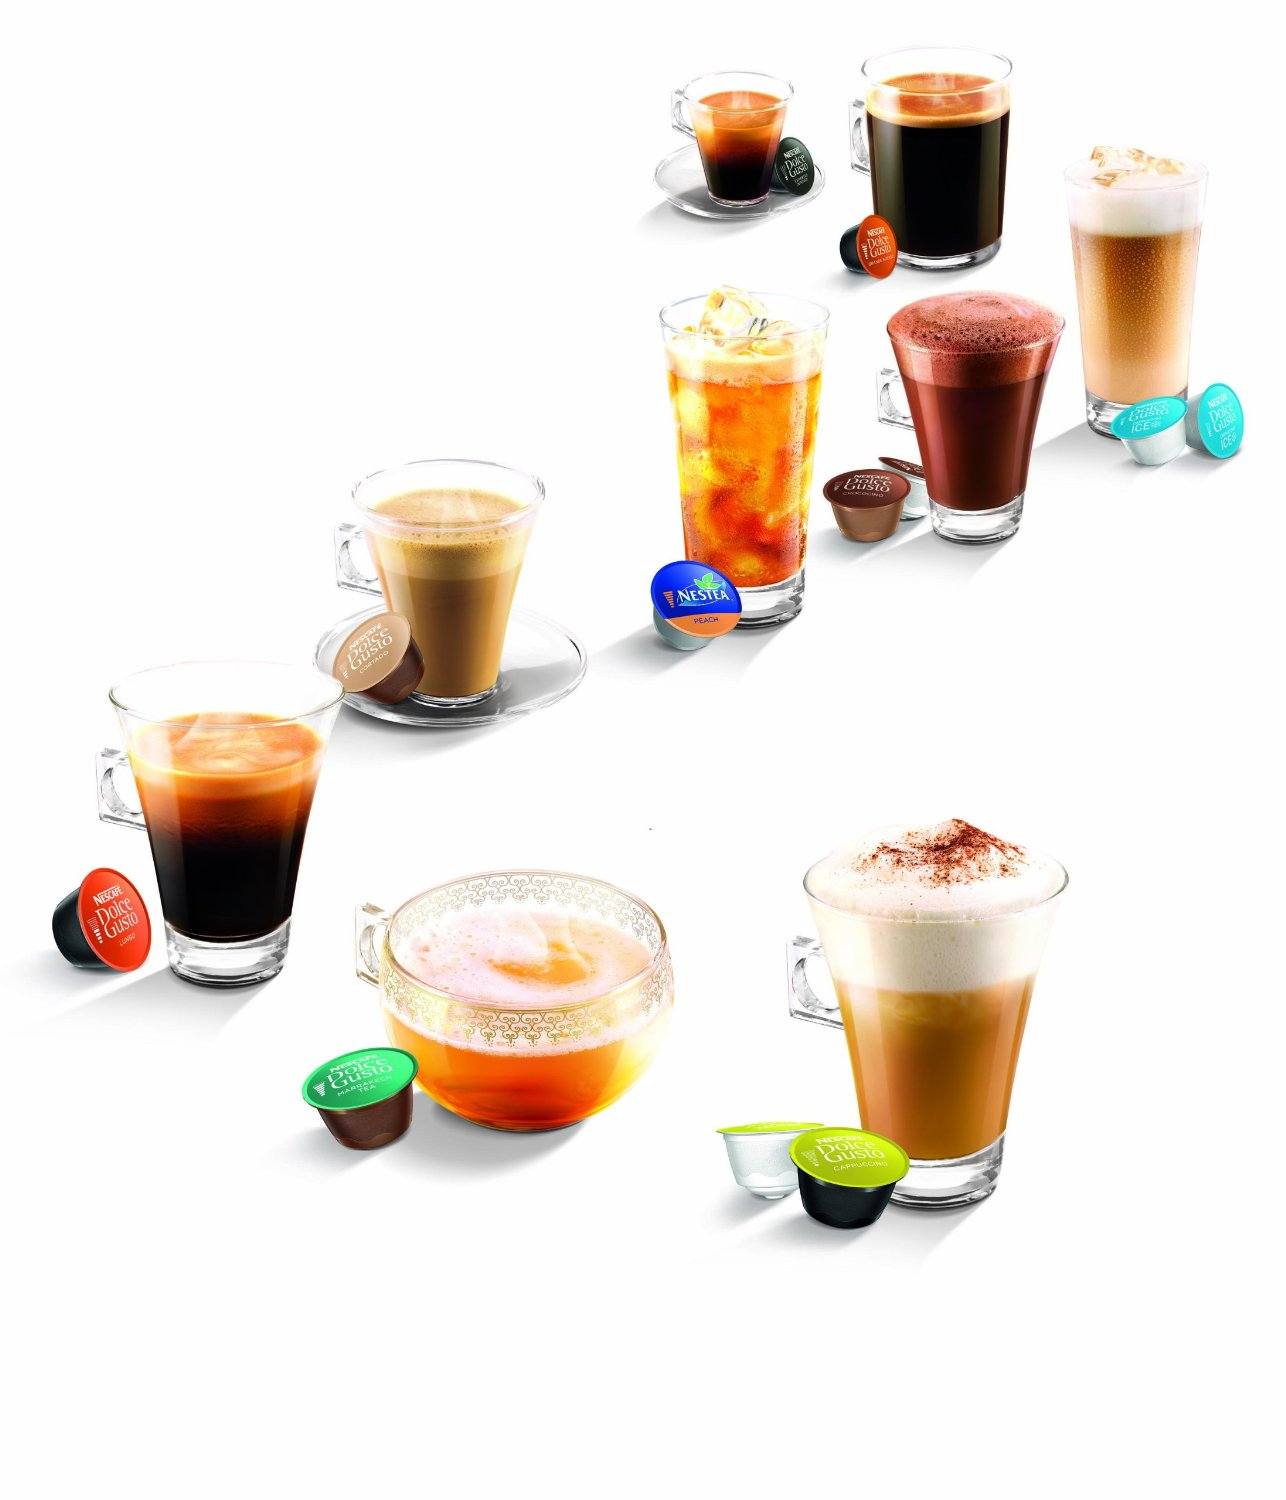 Range of coffee drinks